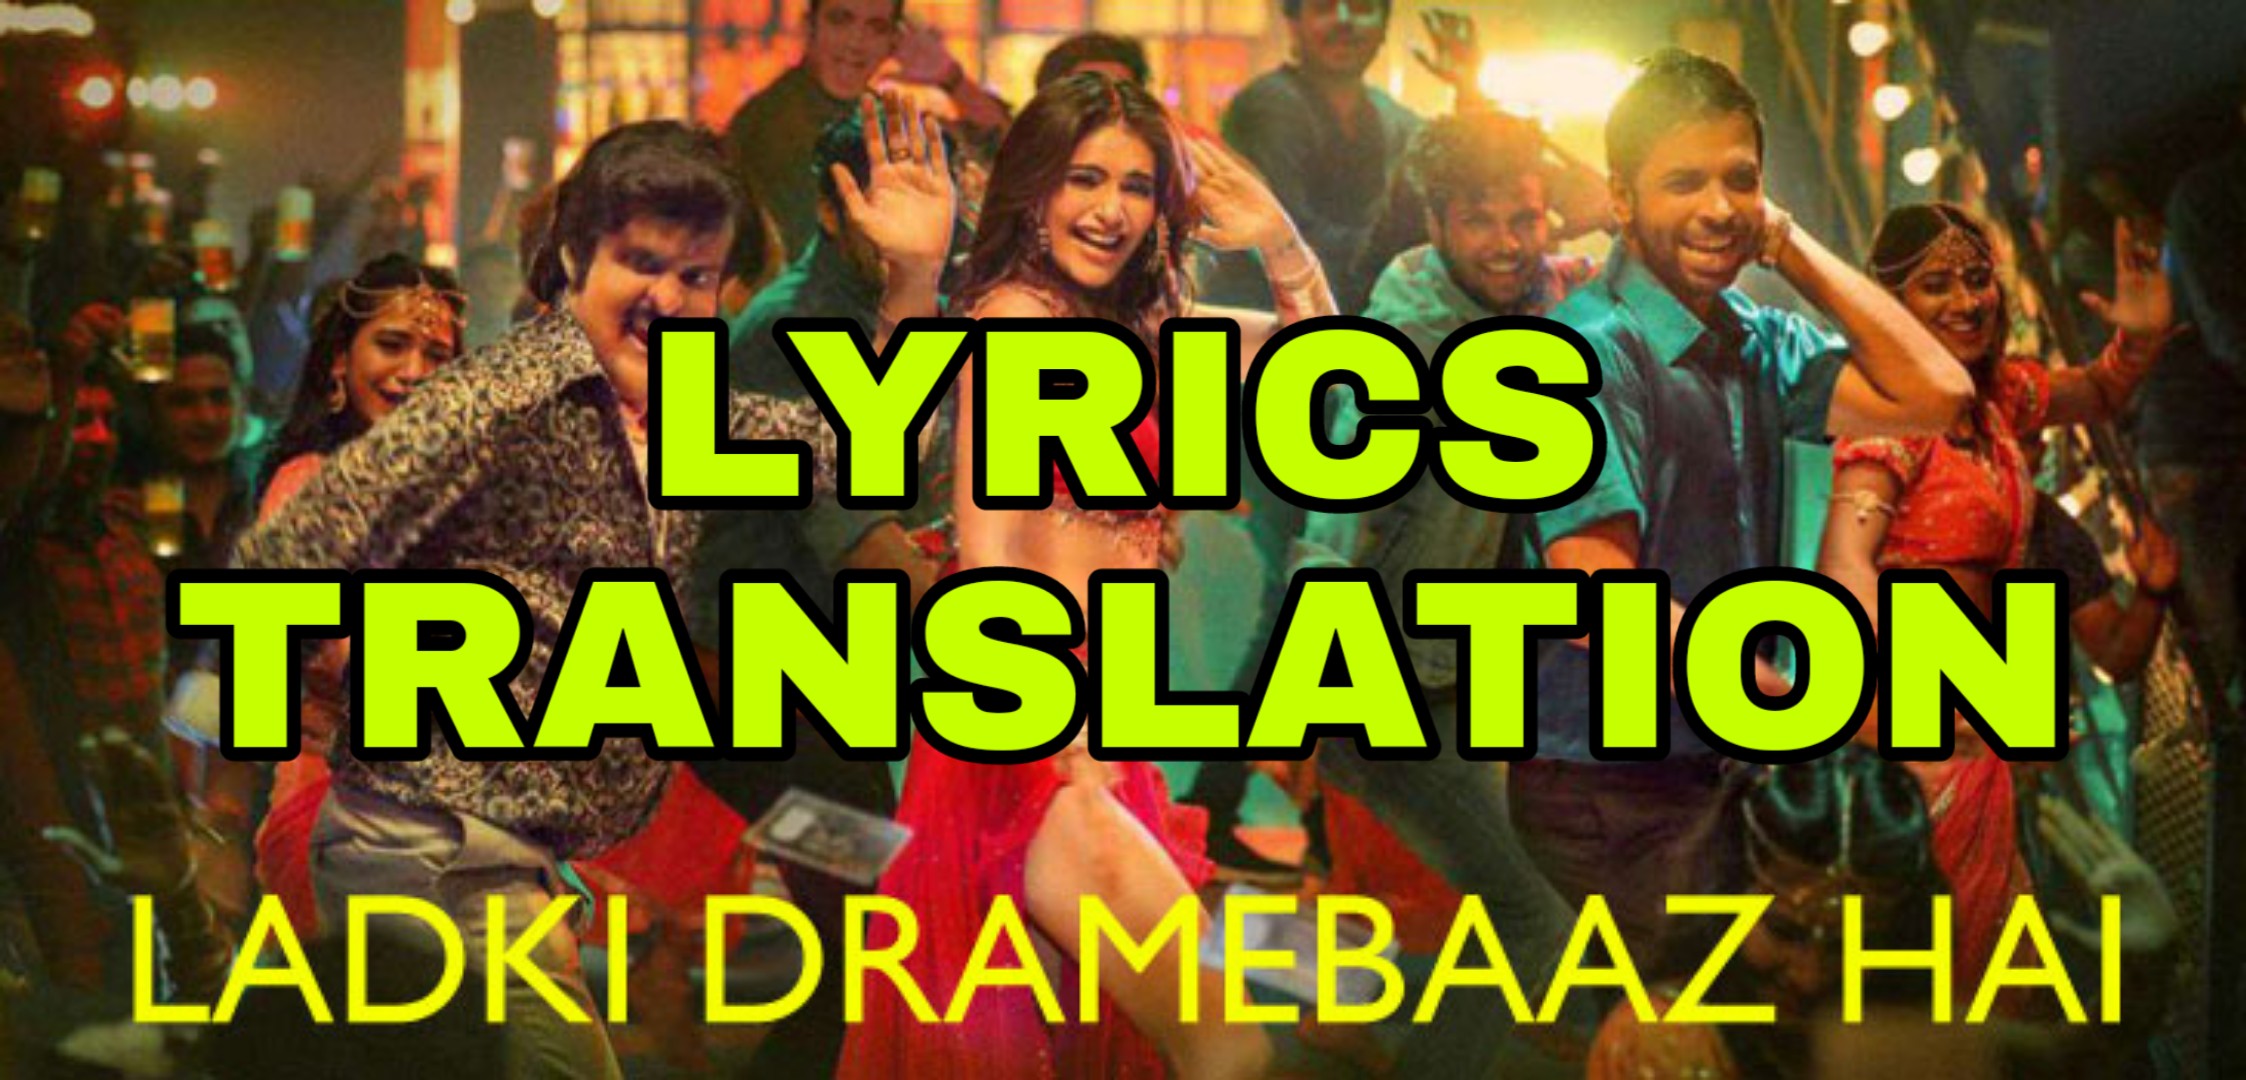 Ladki Dramebaaz Hai Lyrics In English With Translation Suraj Pe Mangal Bhari Lyrics Translaton